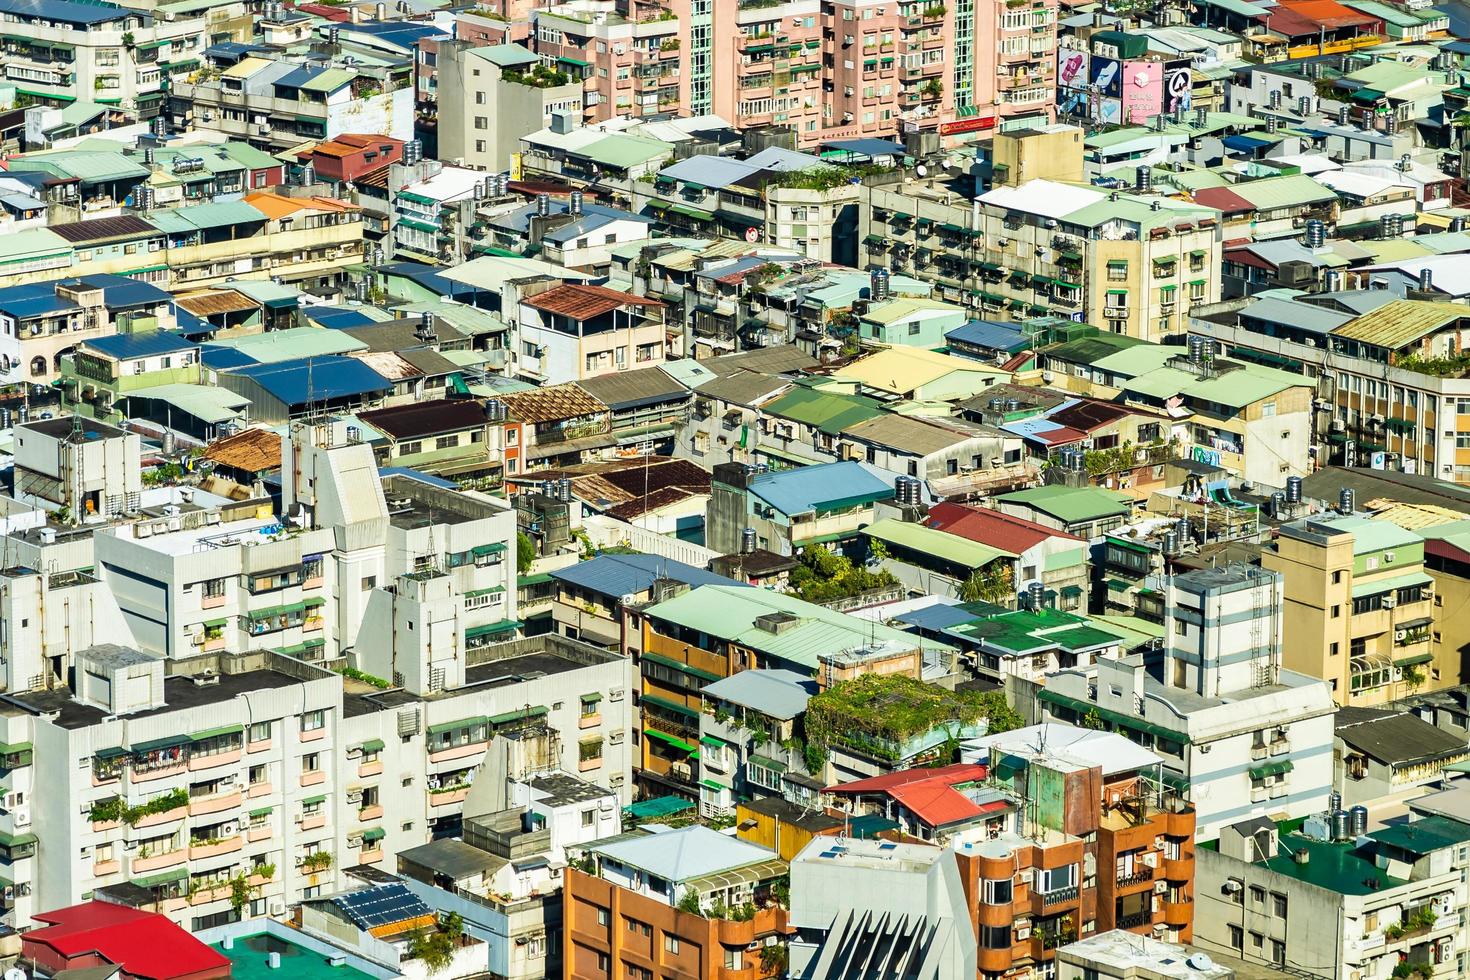 Paysage urbain de la ville de taipei à taiwan photo